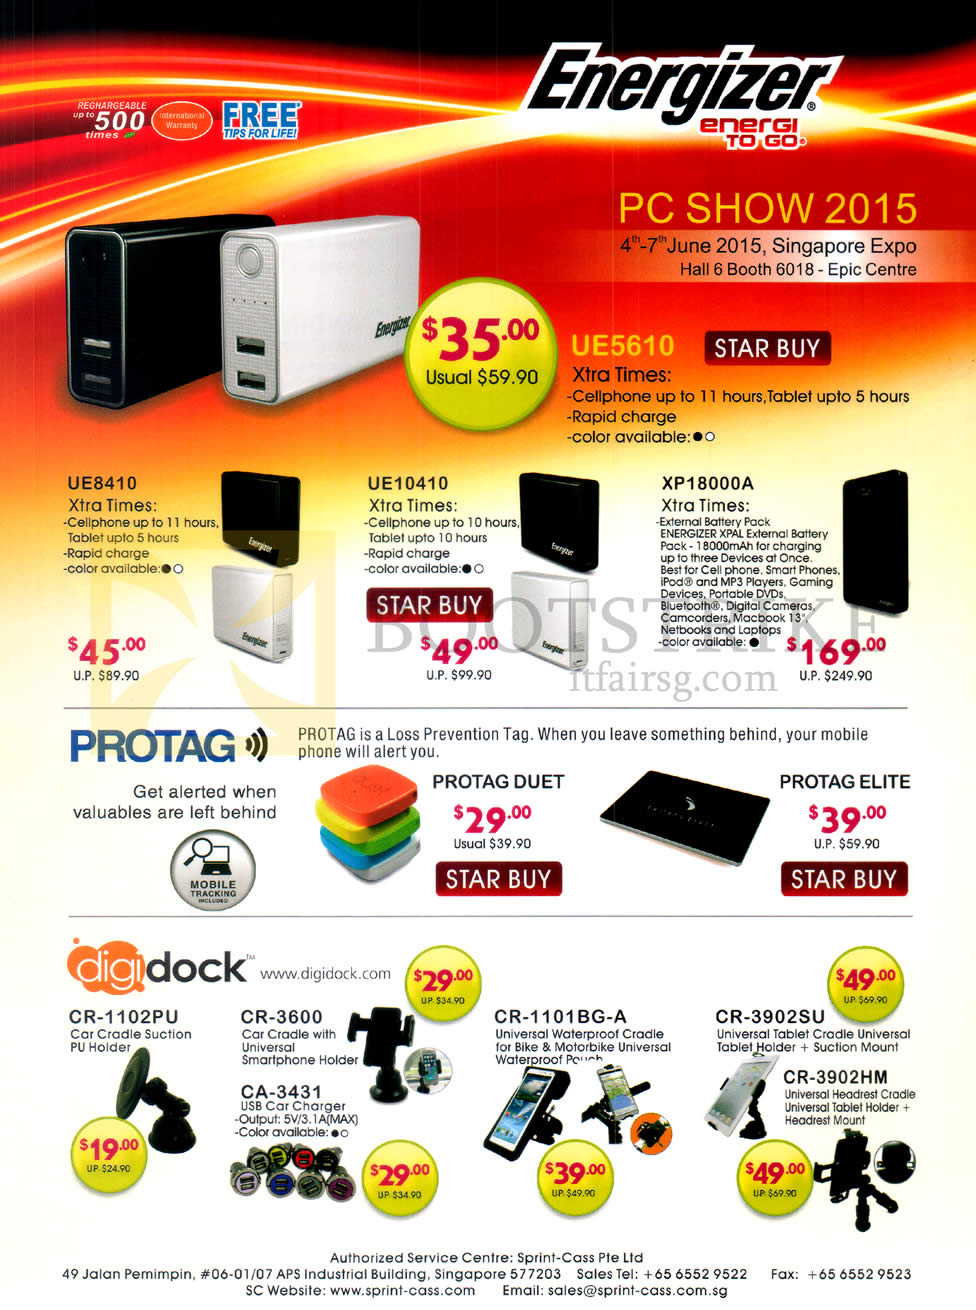 PC SHOW 2015 price list image brochure of Epicentre Energizer Chargers Power Bank, UE8410 UE10410 XP18000a, Protag Duet, Elite, Digidock Suction Holder